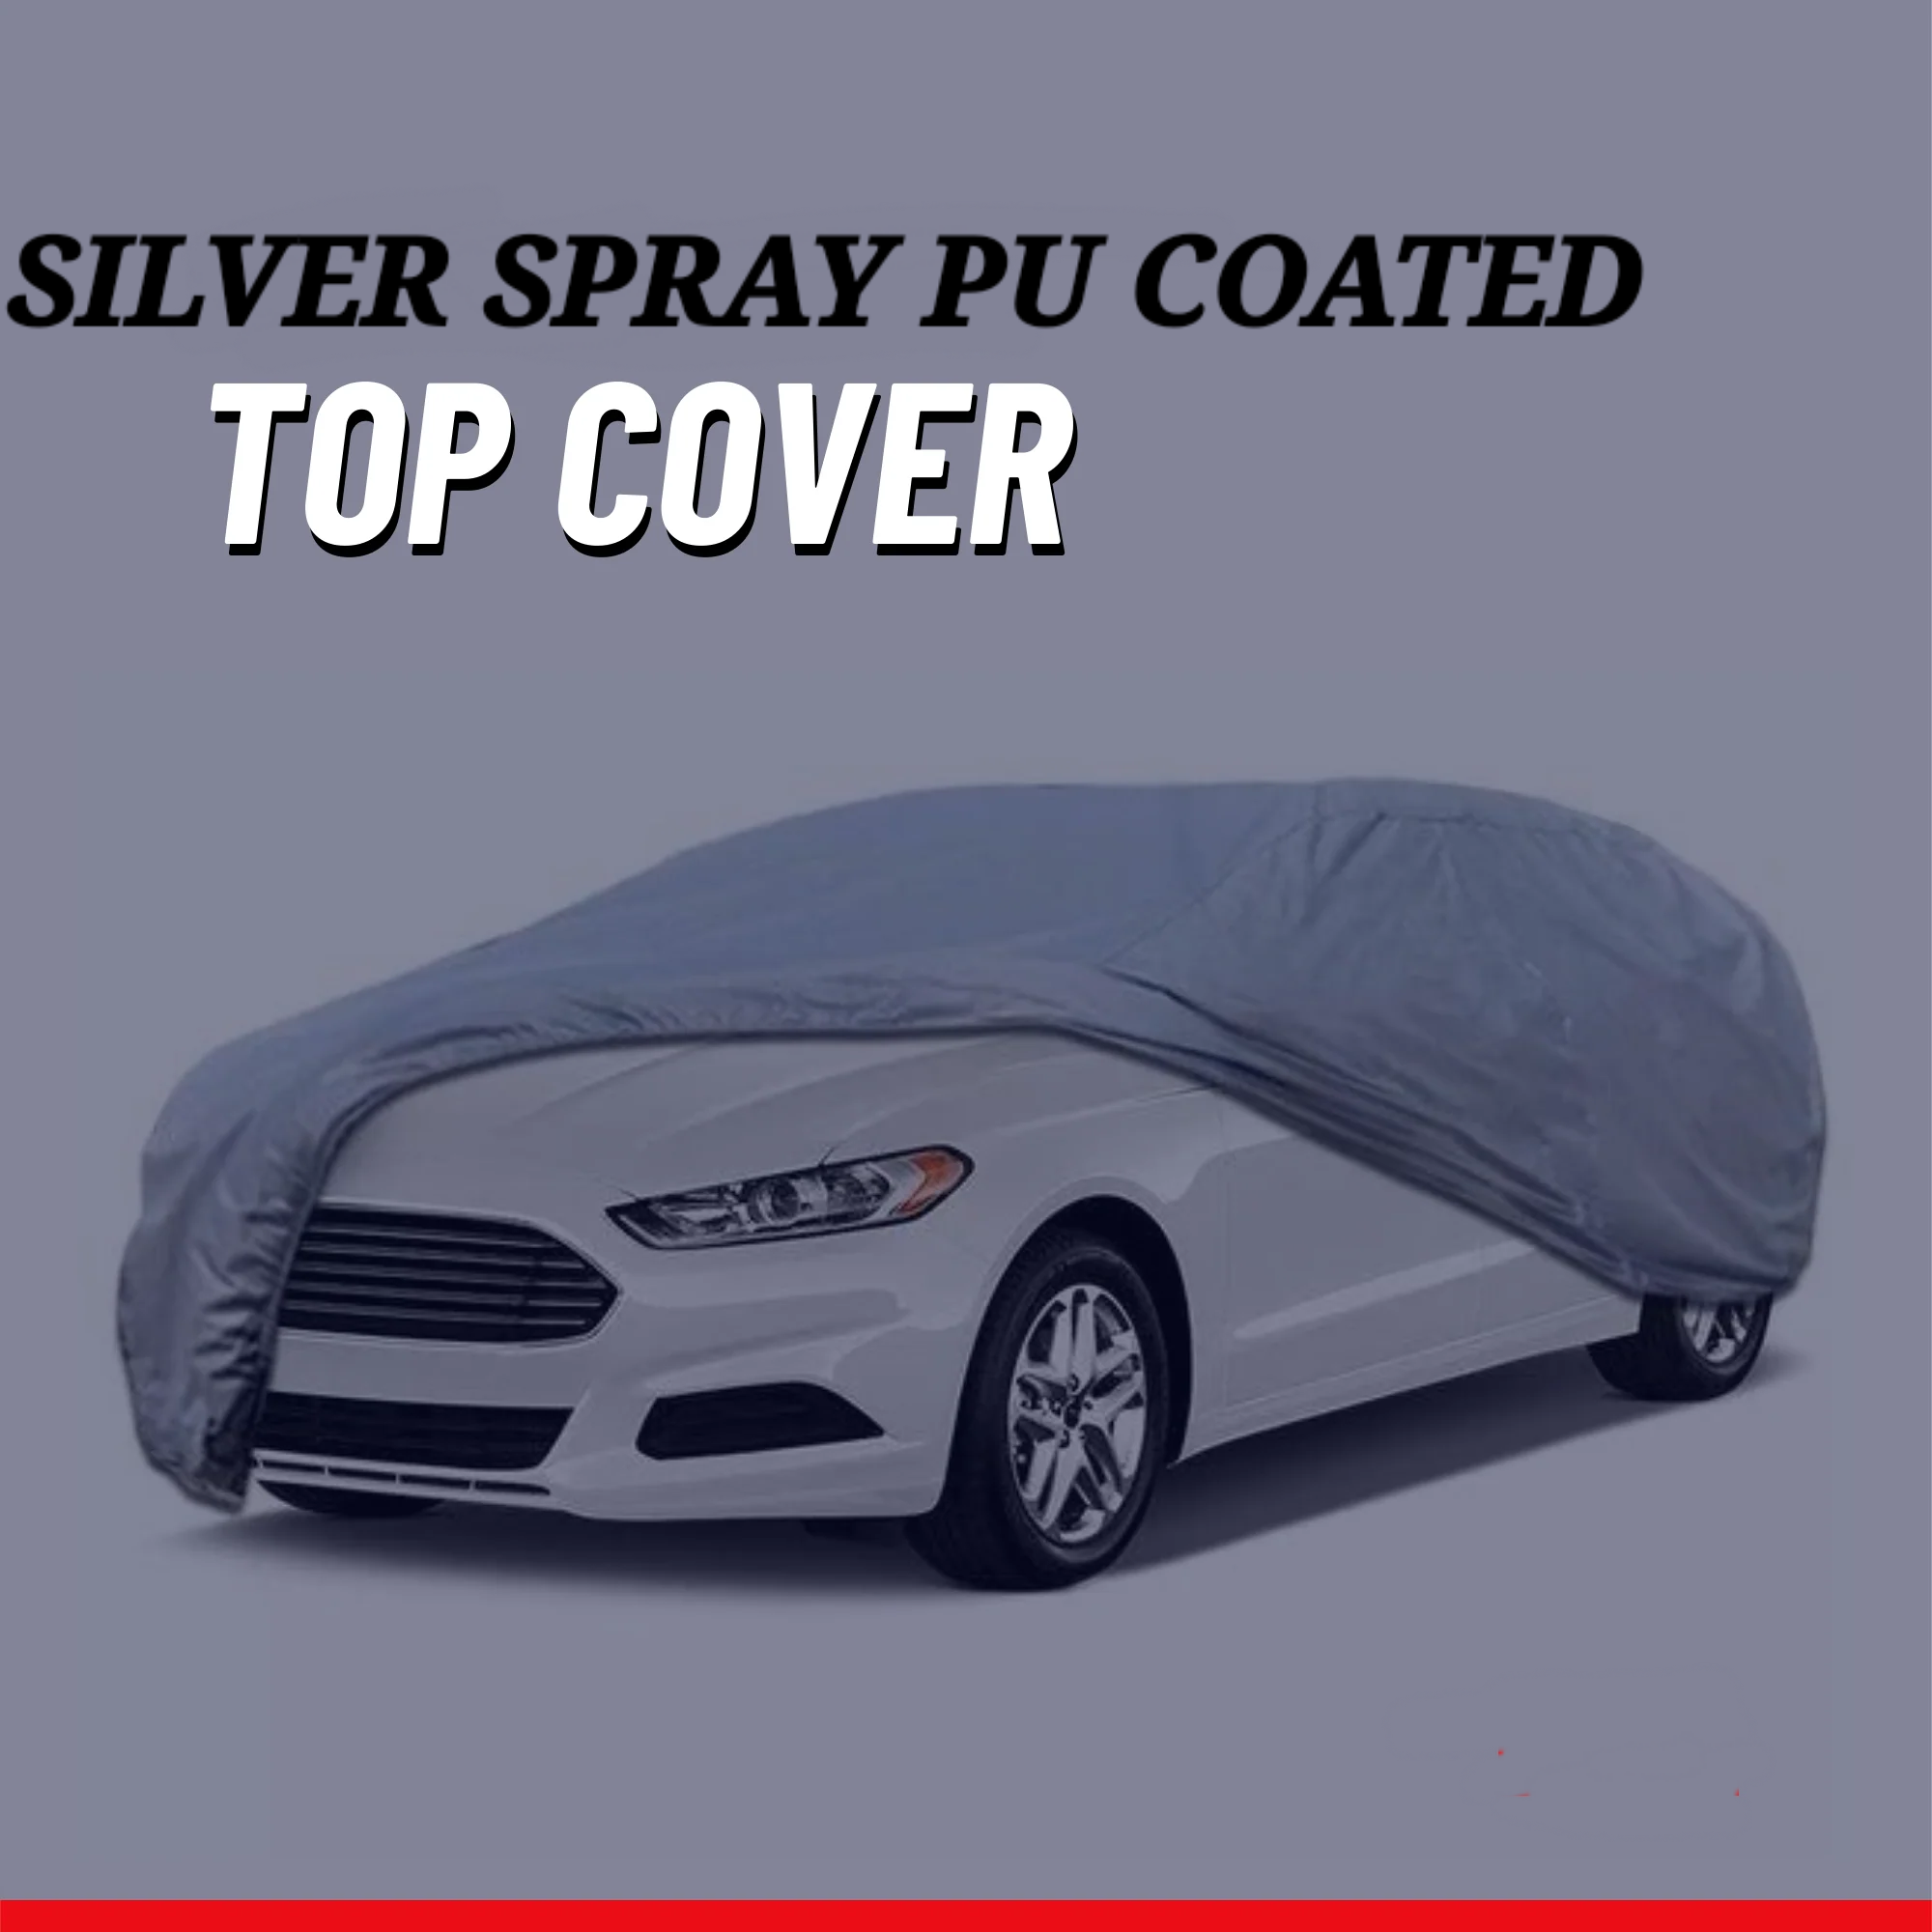 Chery Tiggo 8 2021-2023 Car Top Cover - Waterproof & Dustproof Silver Spray Coated + Free Bag